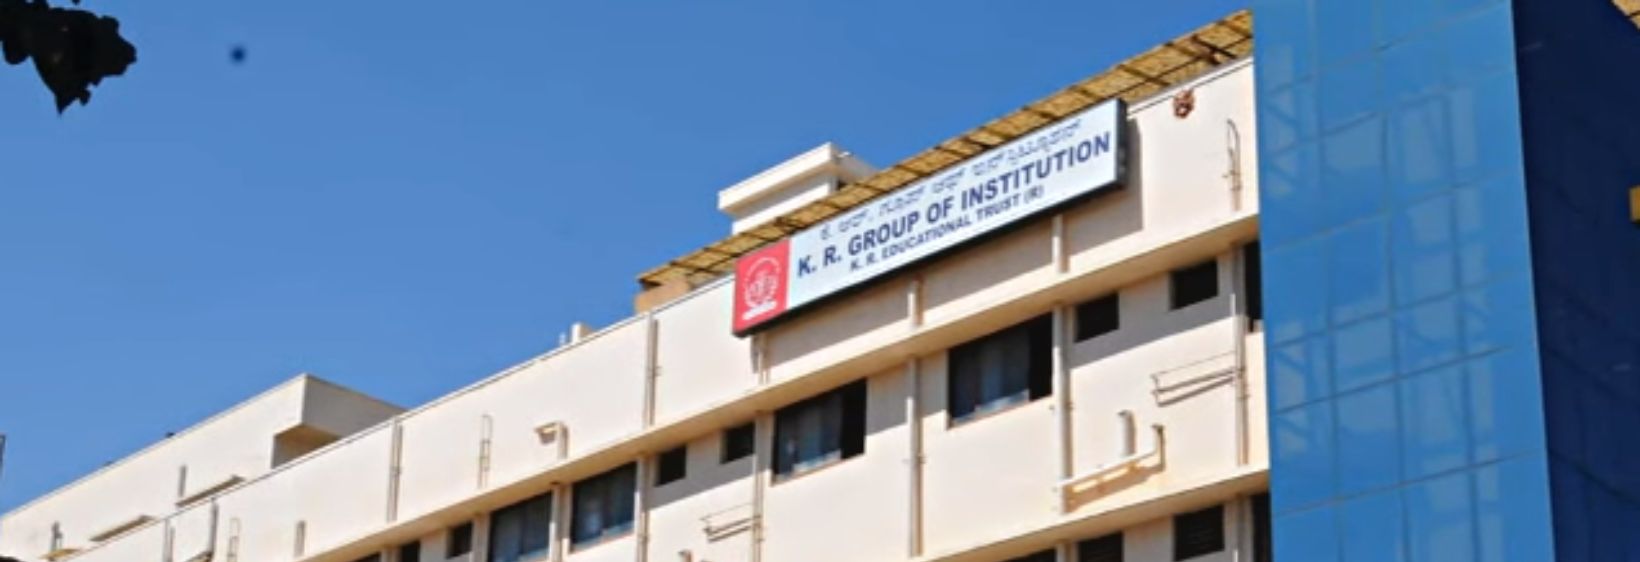 K R College of Nursing - Bangalore